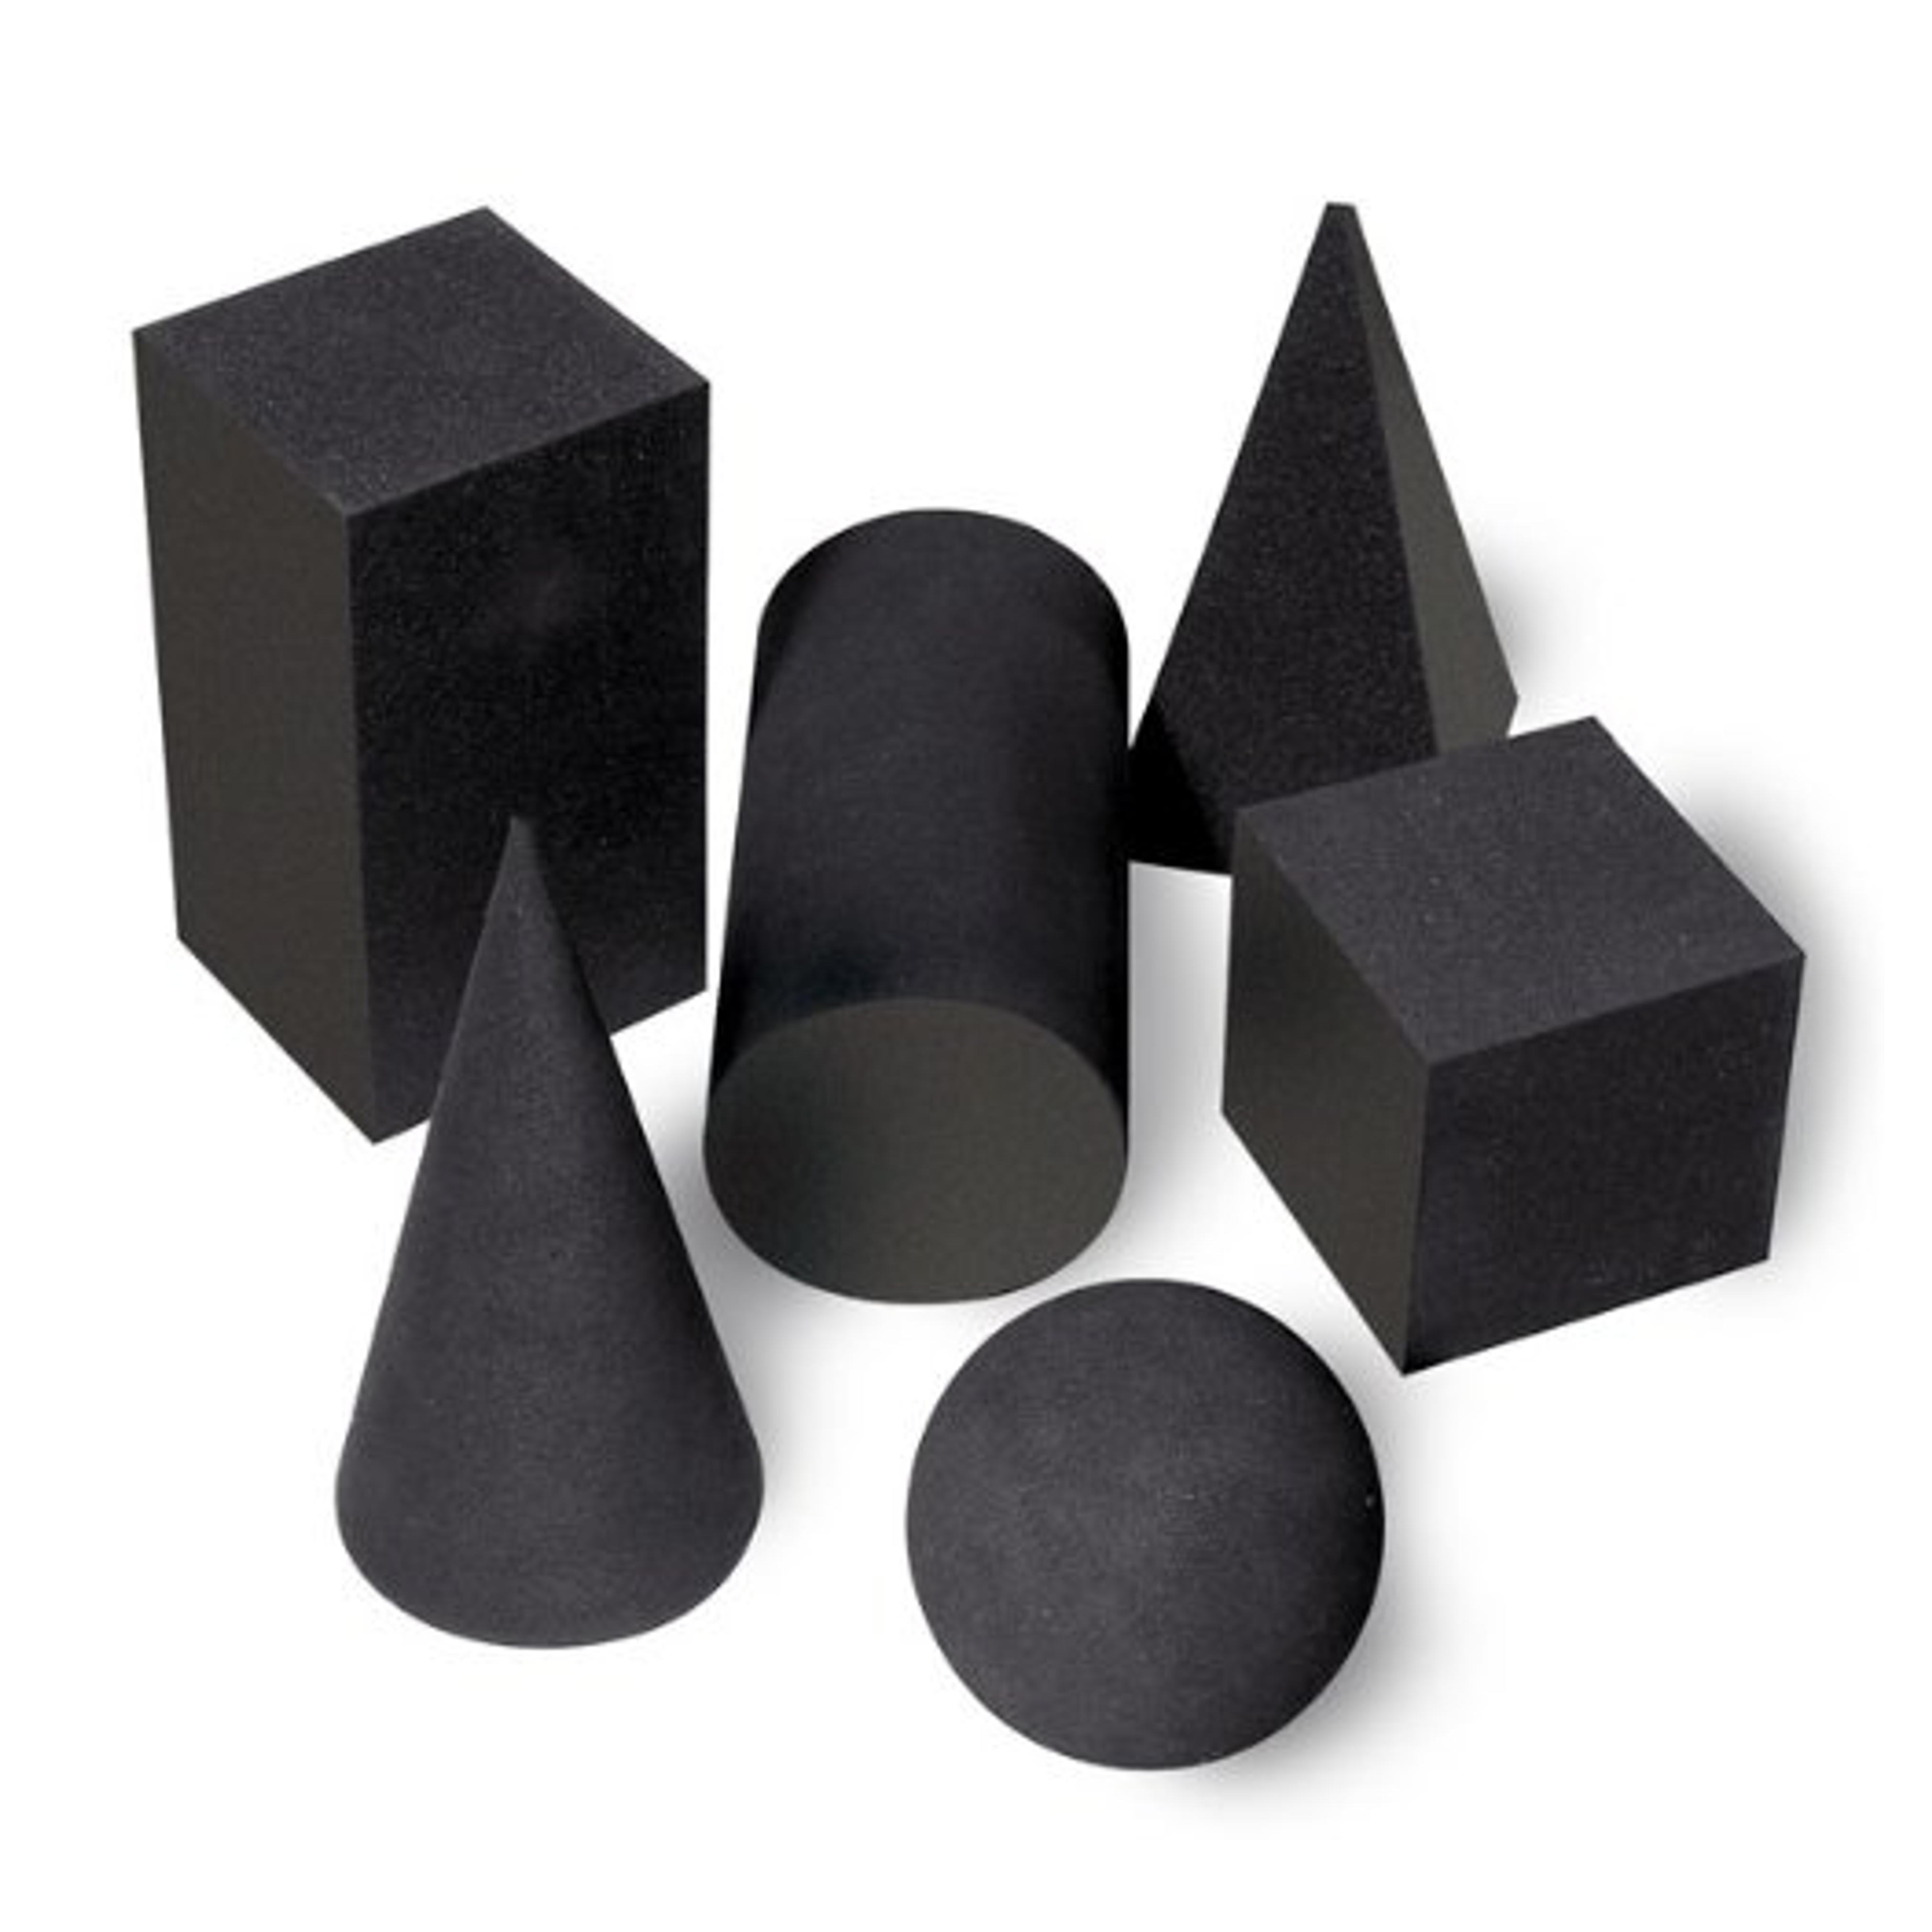 Nasco Foam Geometric Solids Set, Six-Piece, Black